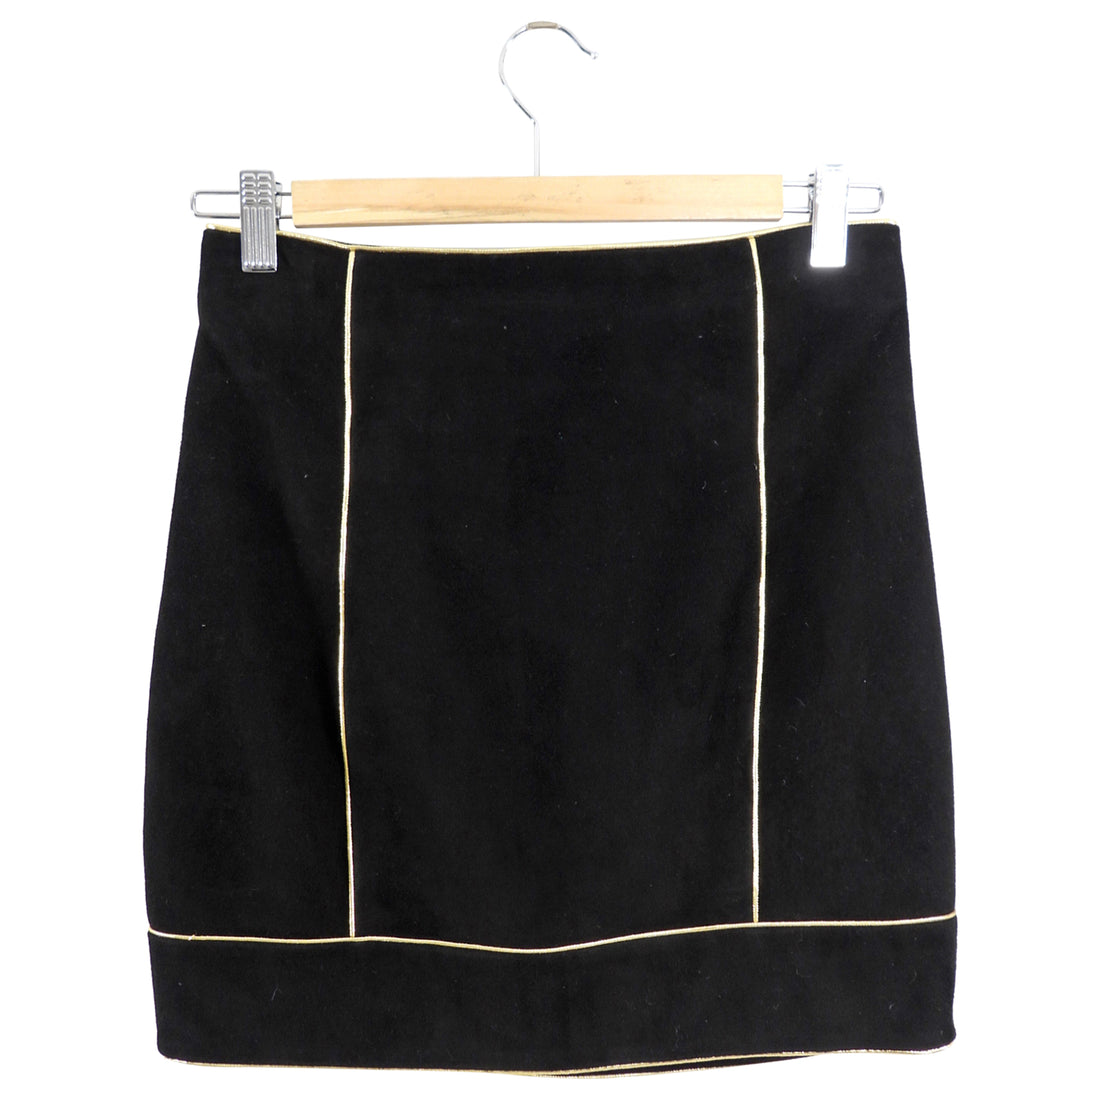 Balmain Black Suede Mini Skirt with Gold Trim - FR36 / USA 4